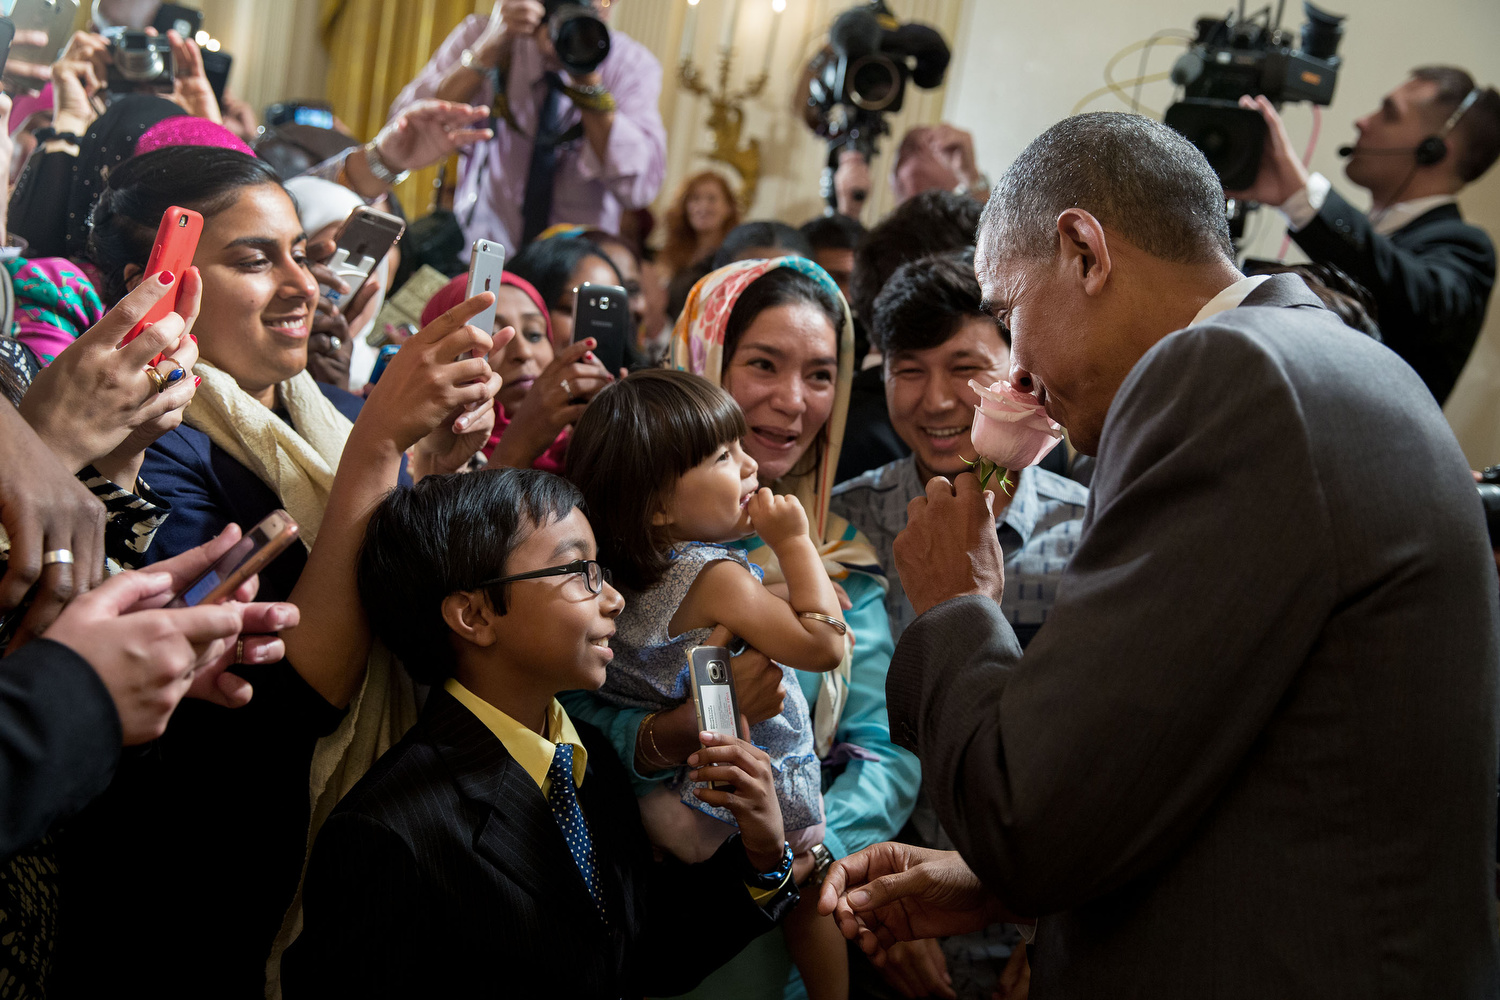 President Obama at Eid reception